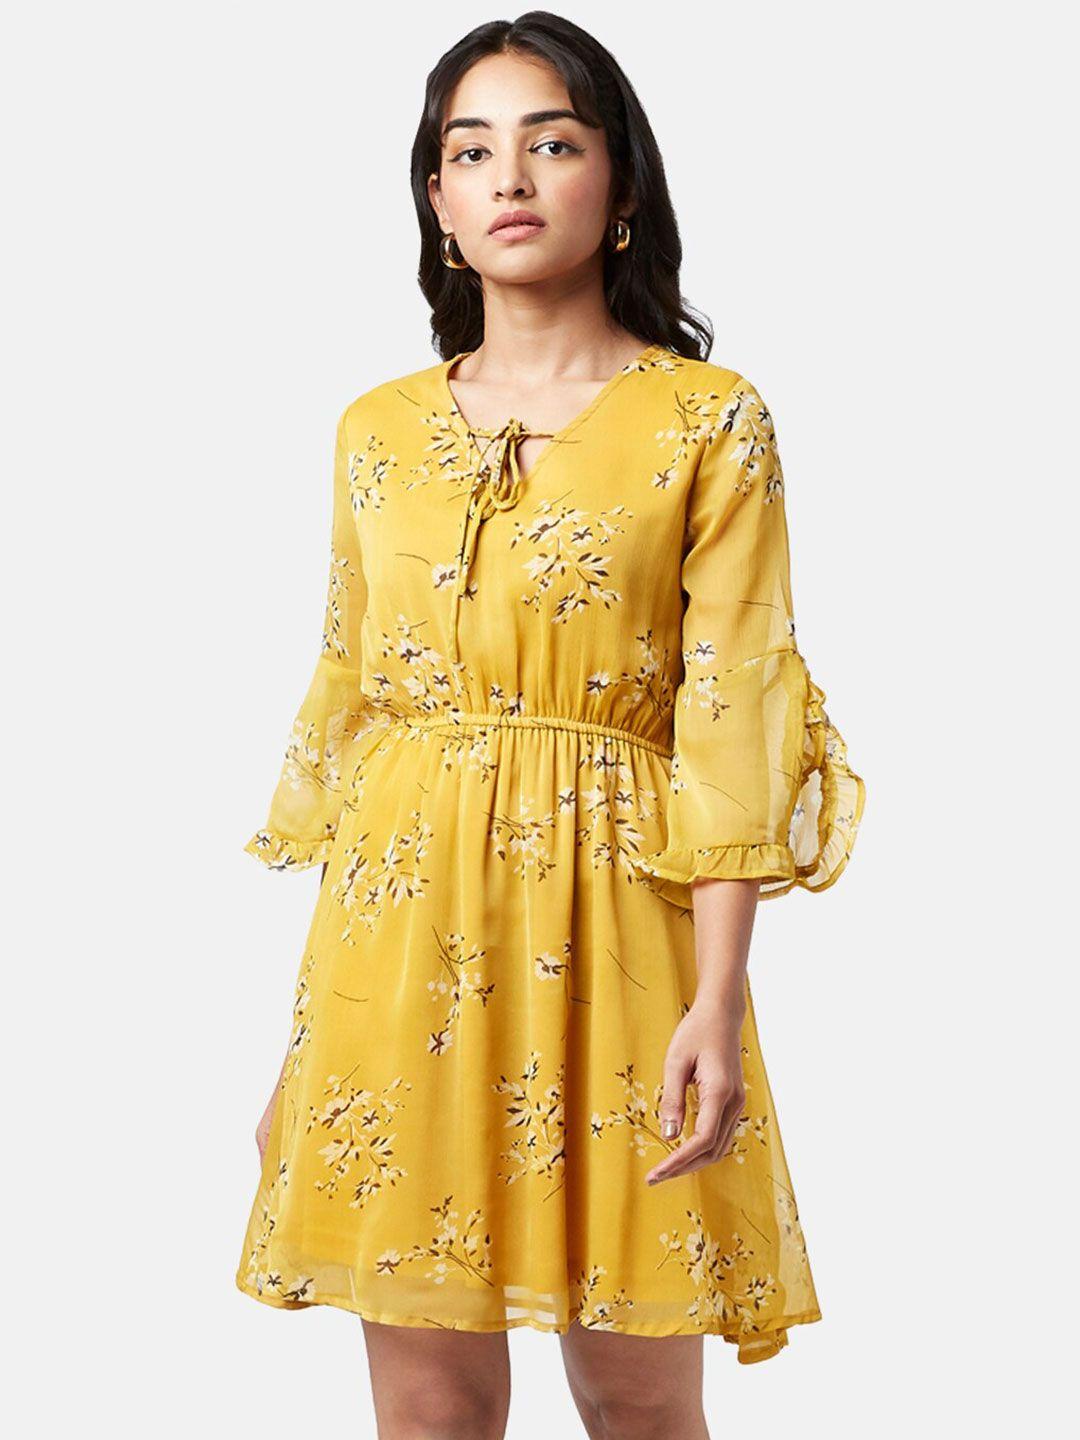 yu by pantaloons mustard yellow floral keyhole neck ethnic dress